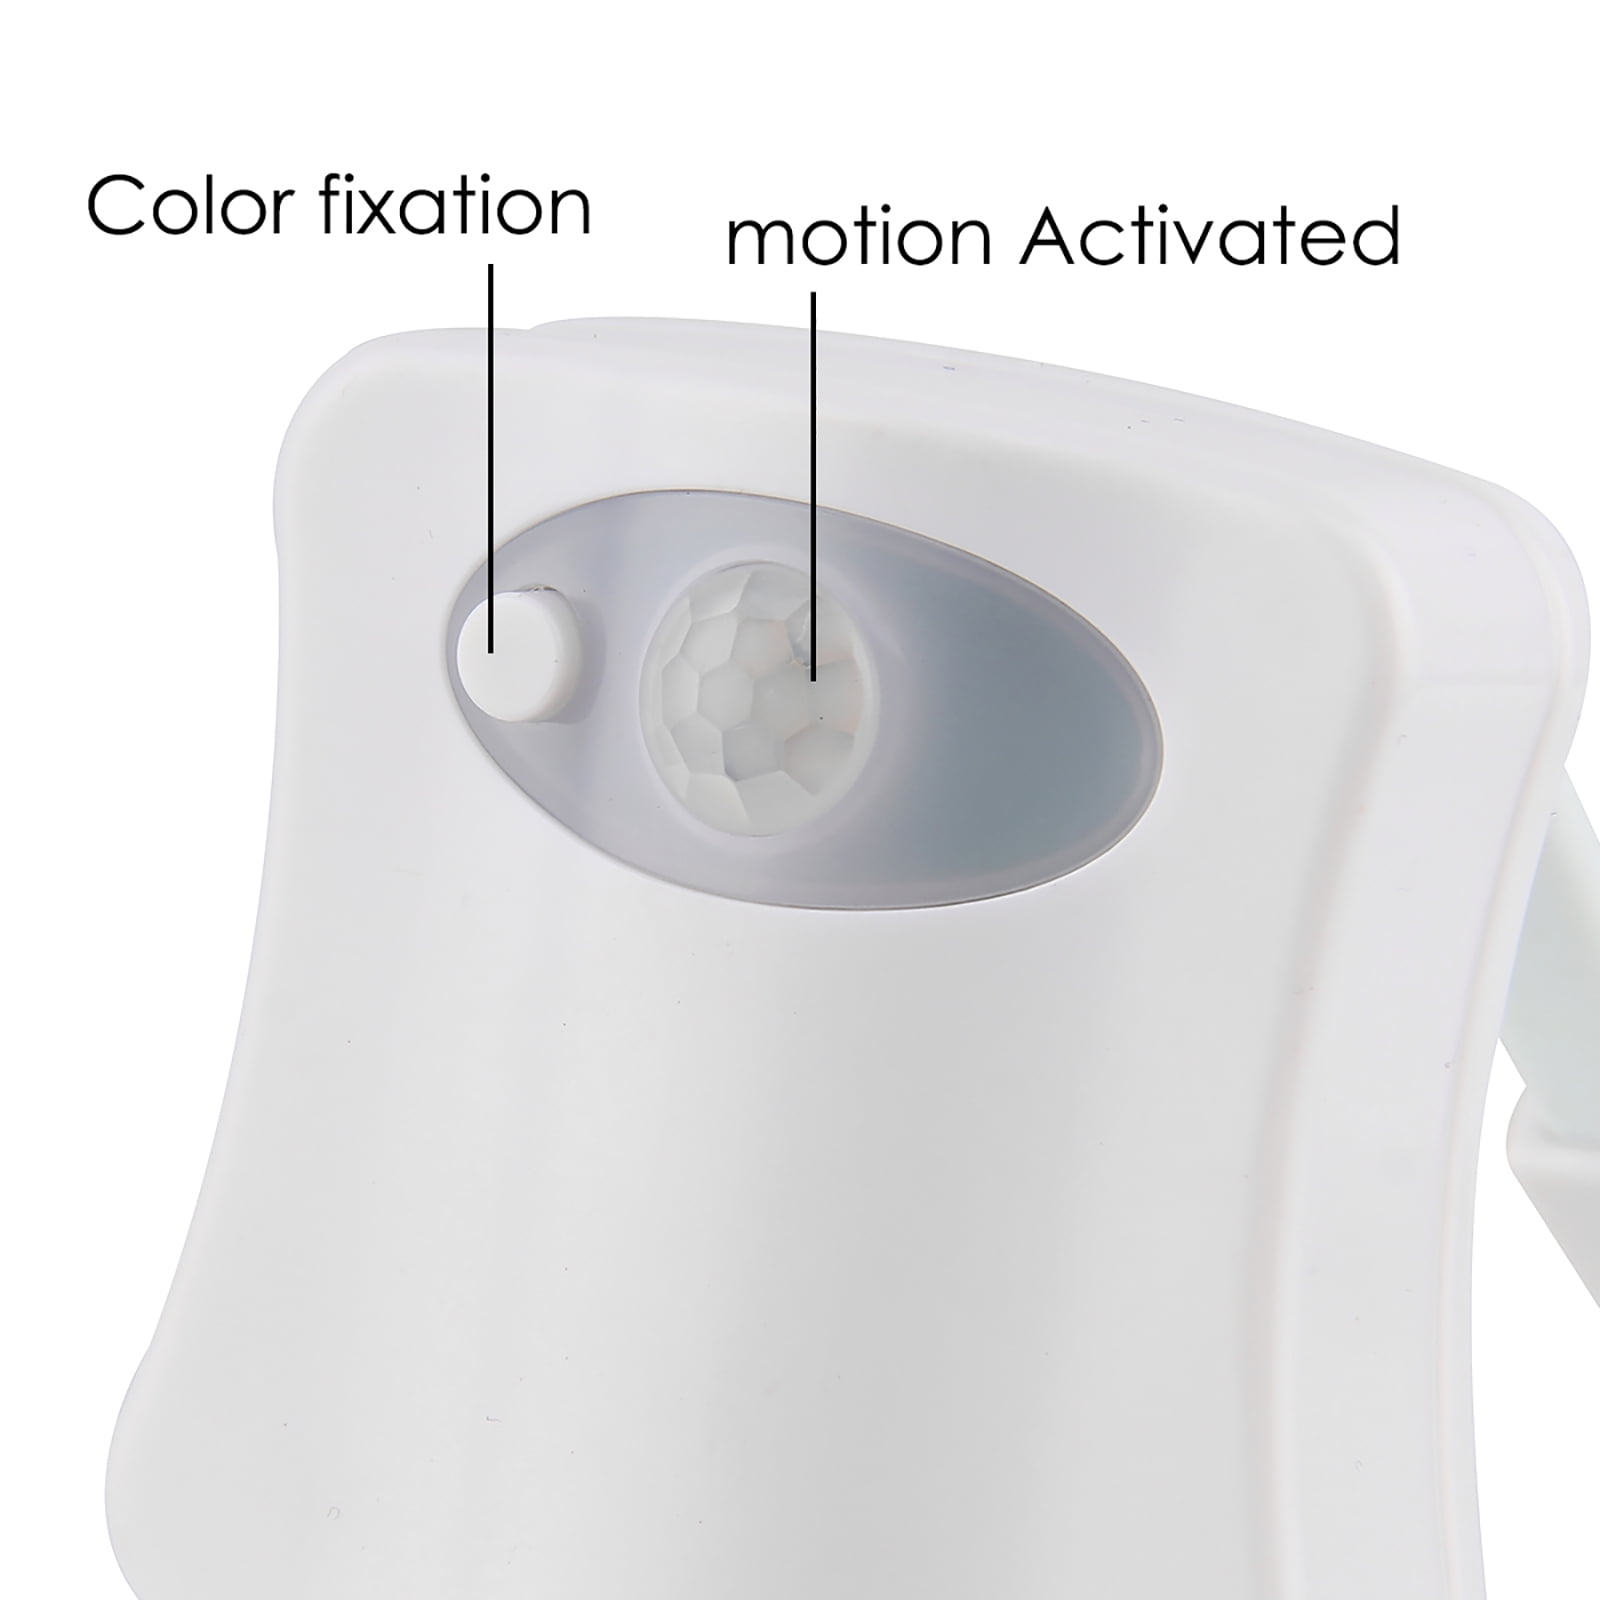 in My Bathroom | Nighty Lighty - Toilet Bowl Illuminator (Motion Sensor UV Sterilizer Universal Fit Sanitary Toilet)